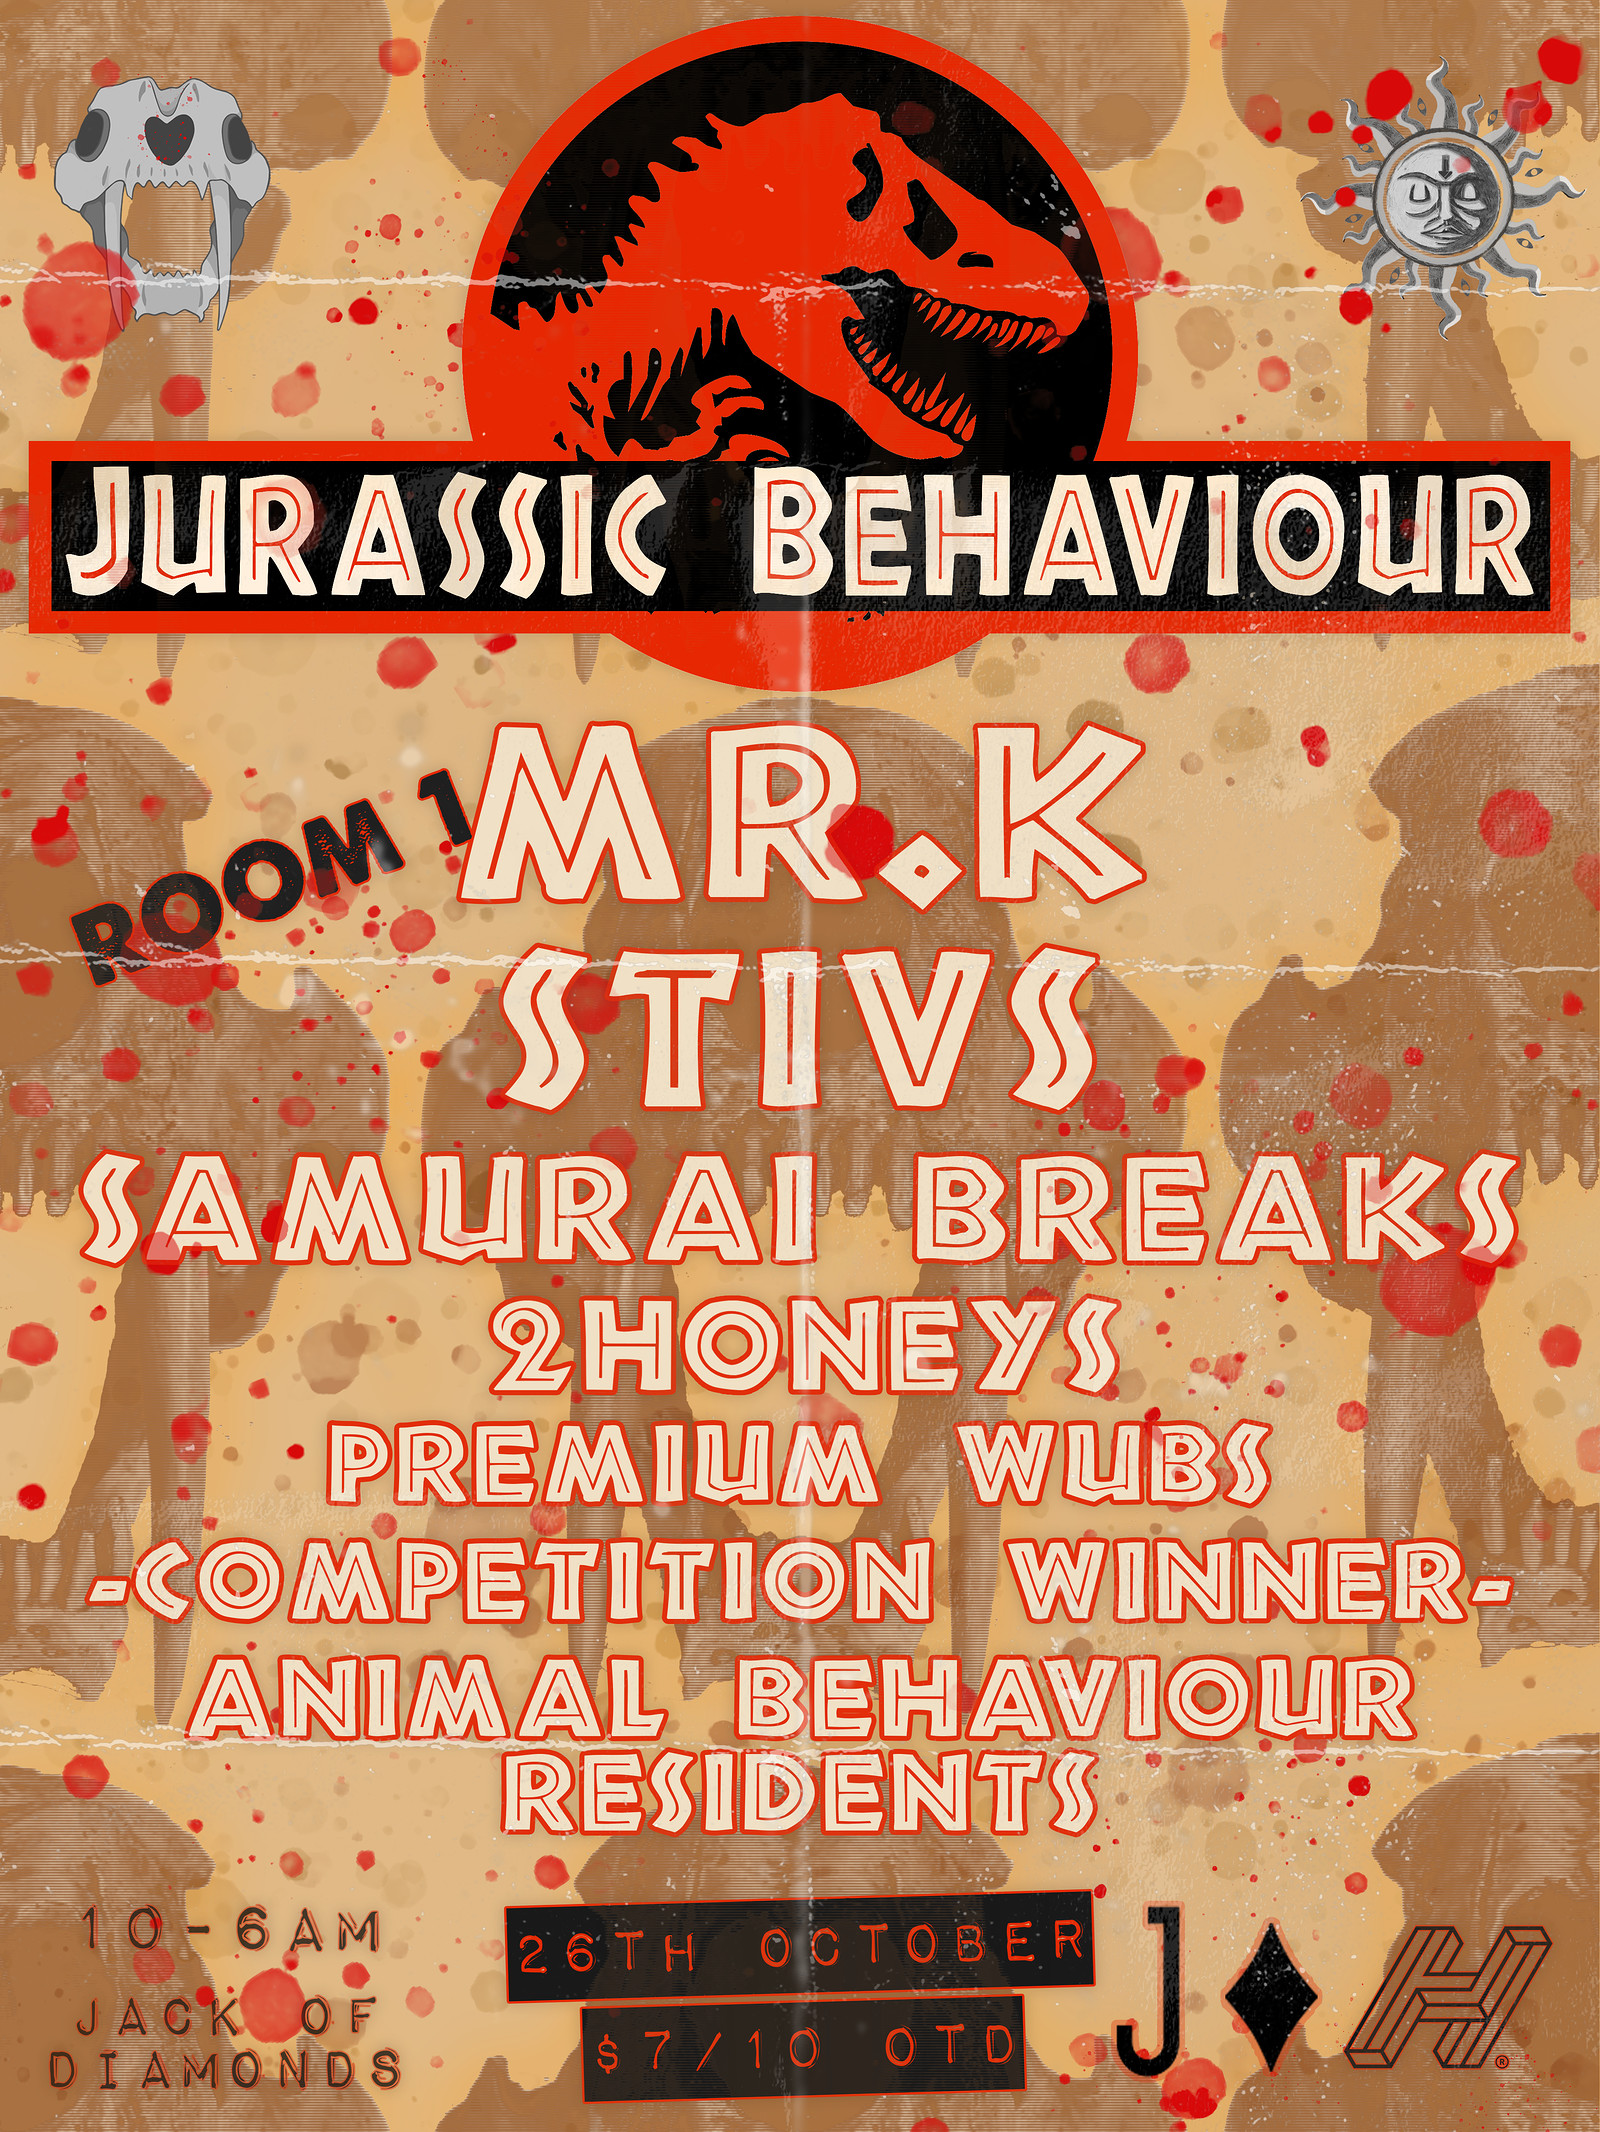 Jurassic Behaviour w. Mr.k/ Stivs / Samurai Breaks at Jack Of Diamonds